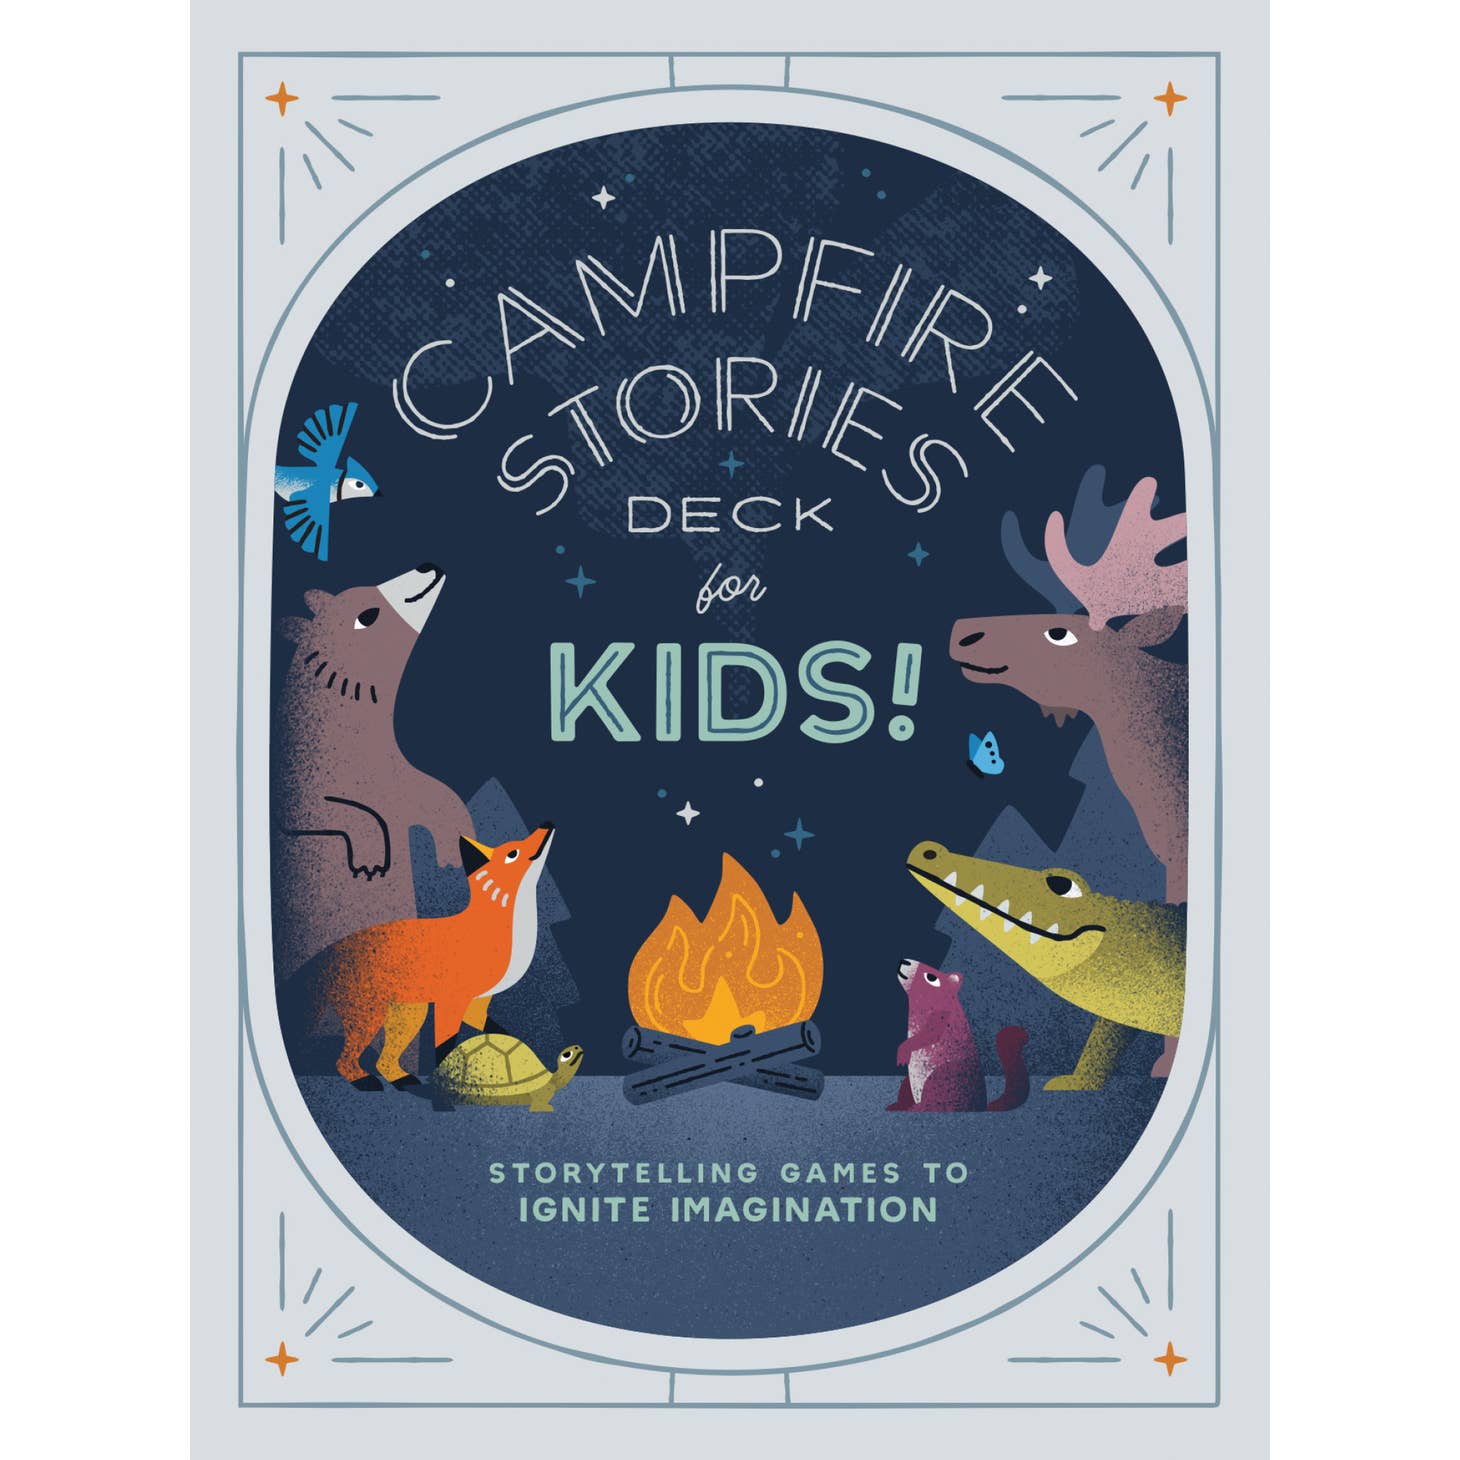 Campfire Stories Deck -- For Kids!